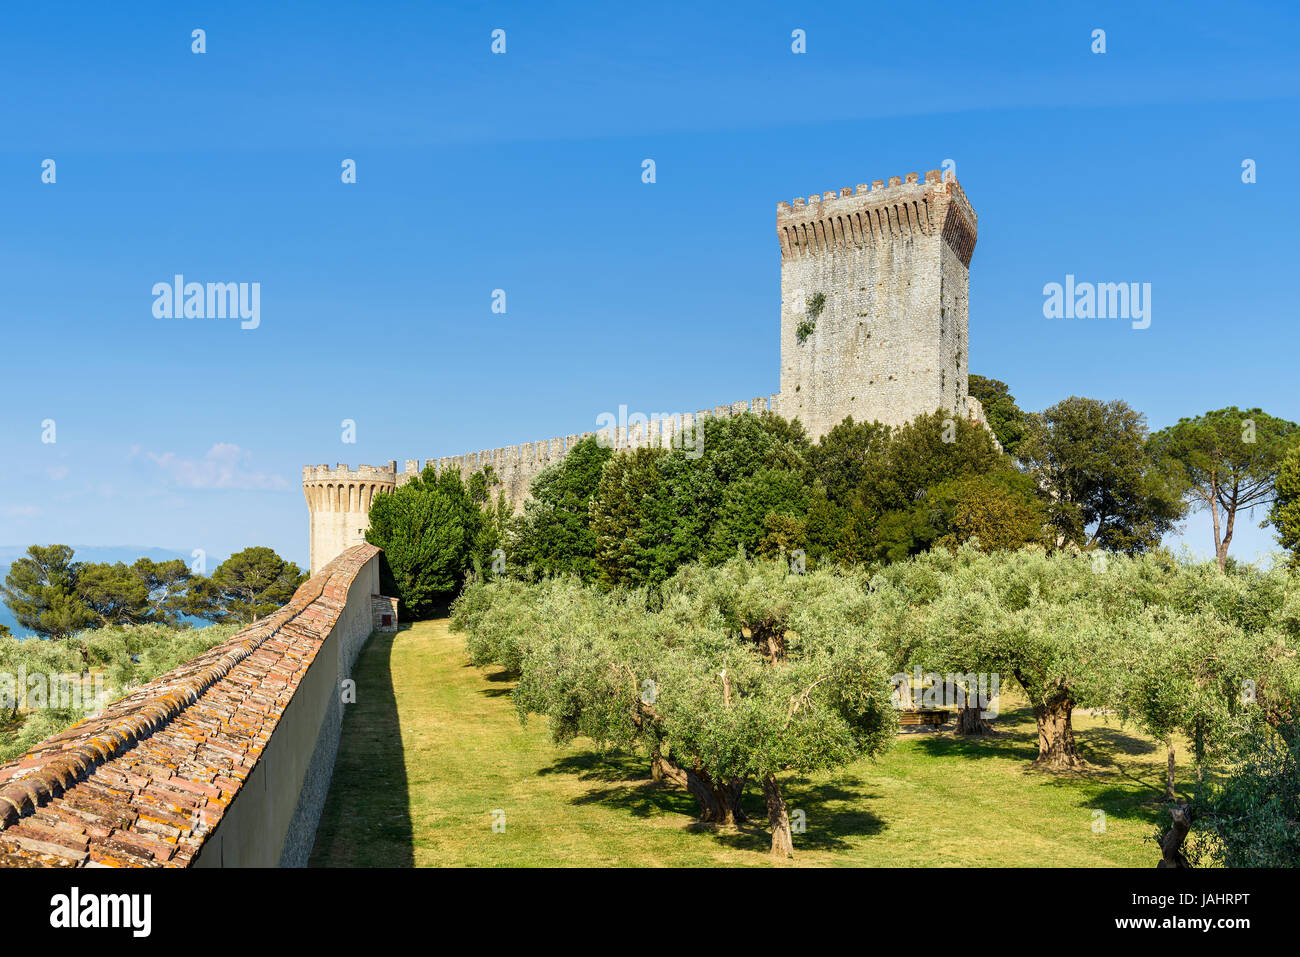 Castiglione del Lago, Italie - 30 mai 2017 -forteresse médiévale dans le centre historique de Castiglione del Lago, Ombrie, Italie Banque D'Images